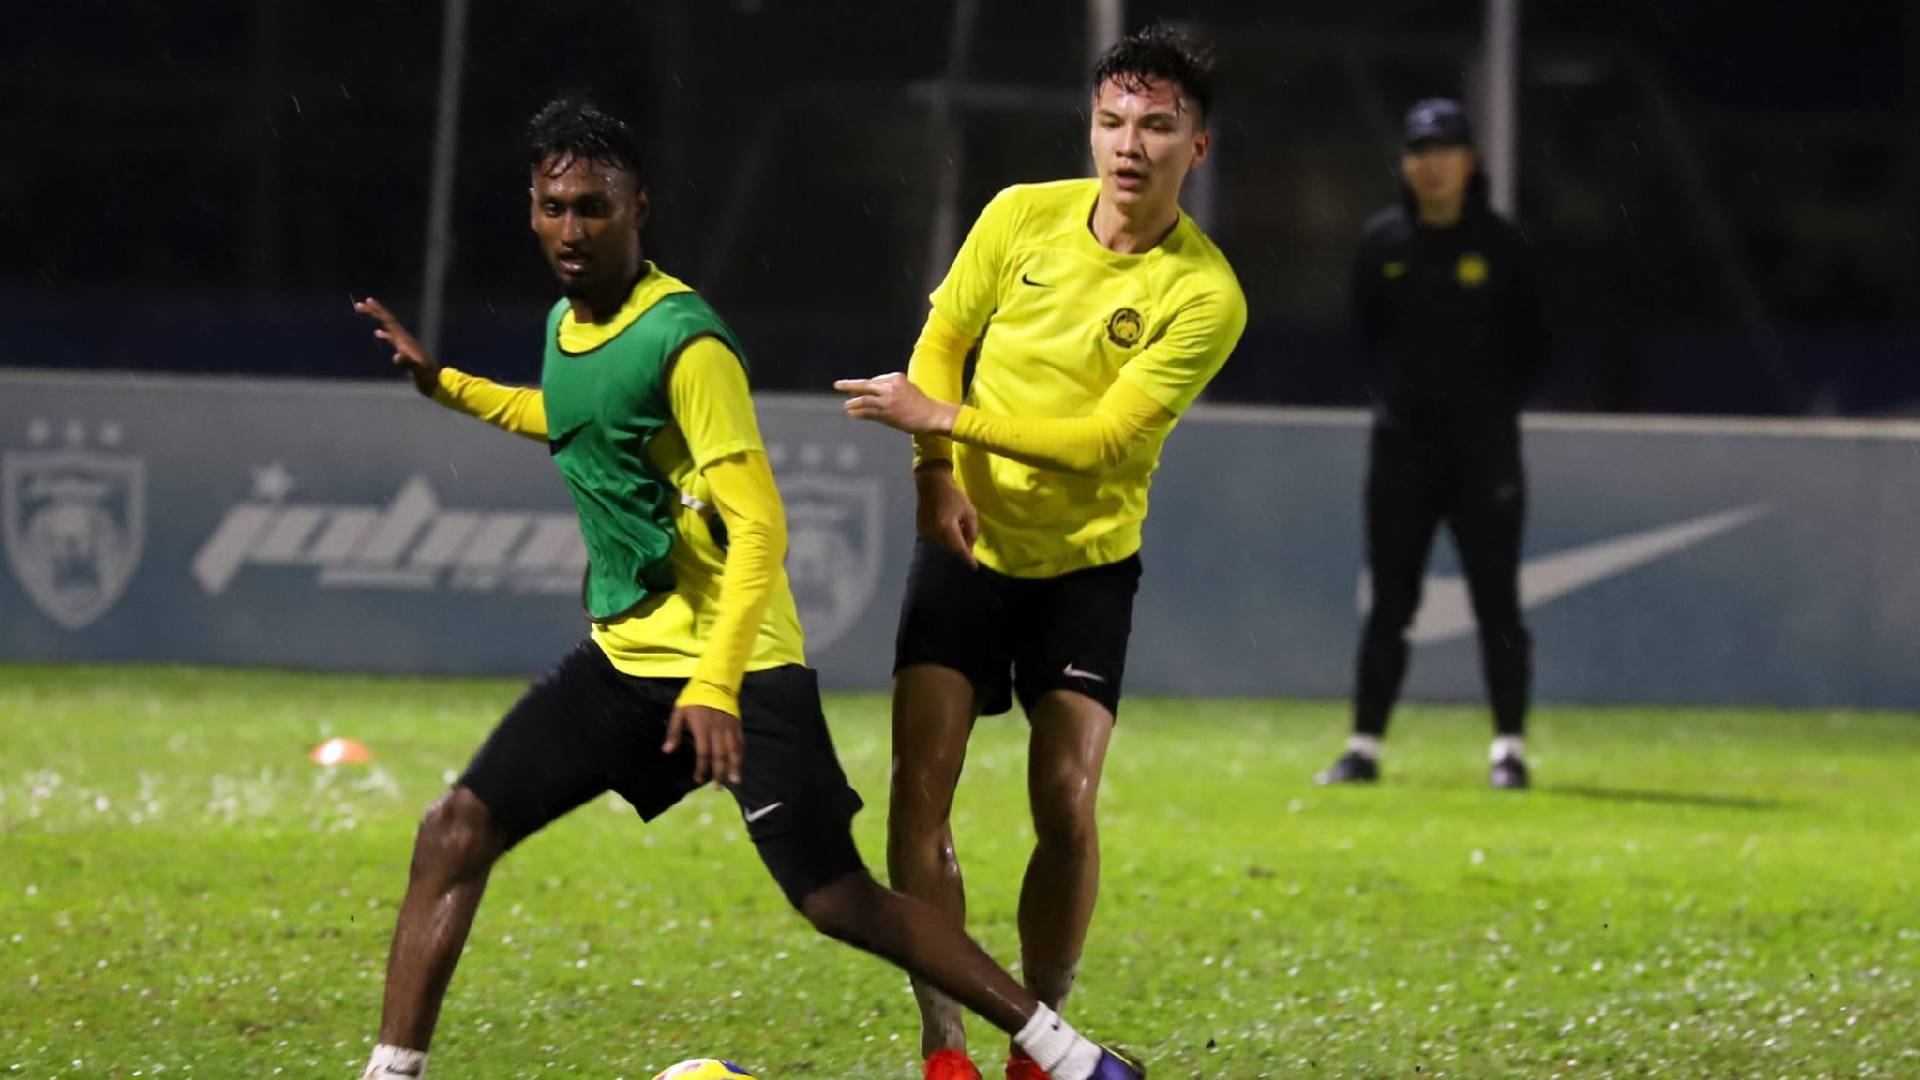 Stuart Wilkin FA Malaysia Stuart Wilkin Sedia Bersaing Rebut Kesebelasan Utama Harimau Malaya